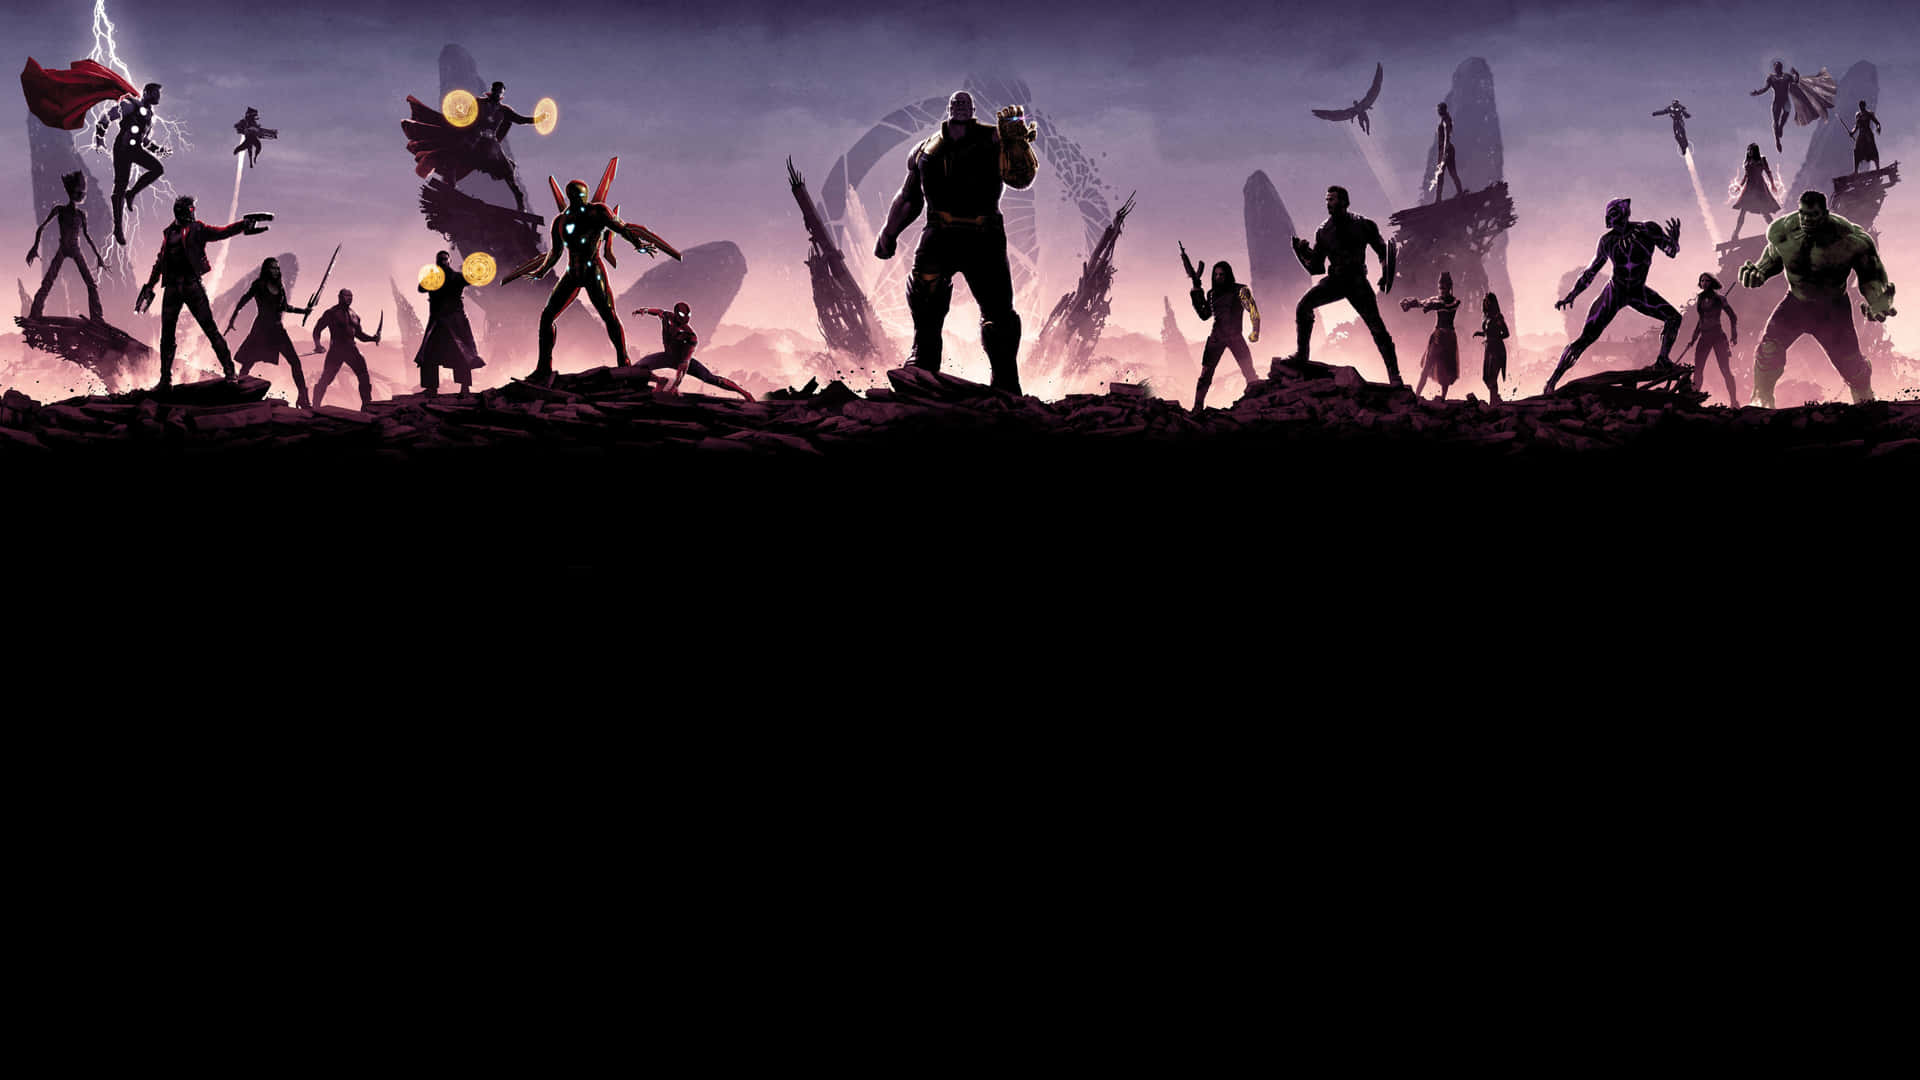 Diemächtigsten Helden Der Erde Vereinen Sich In Marvel's Infinity War. Wallpaper